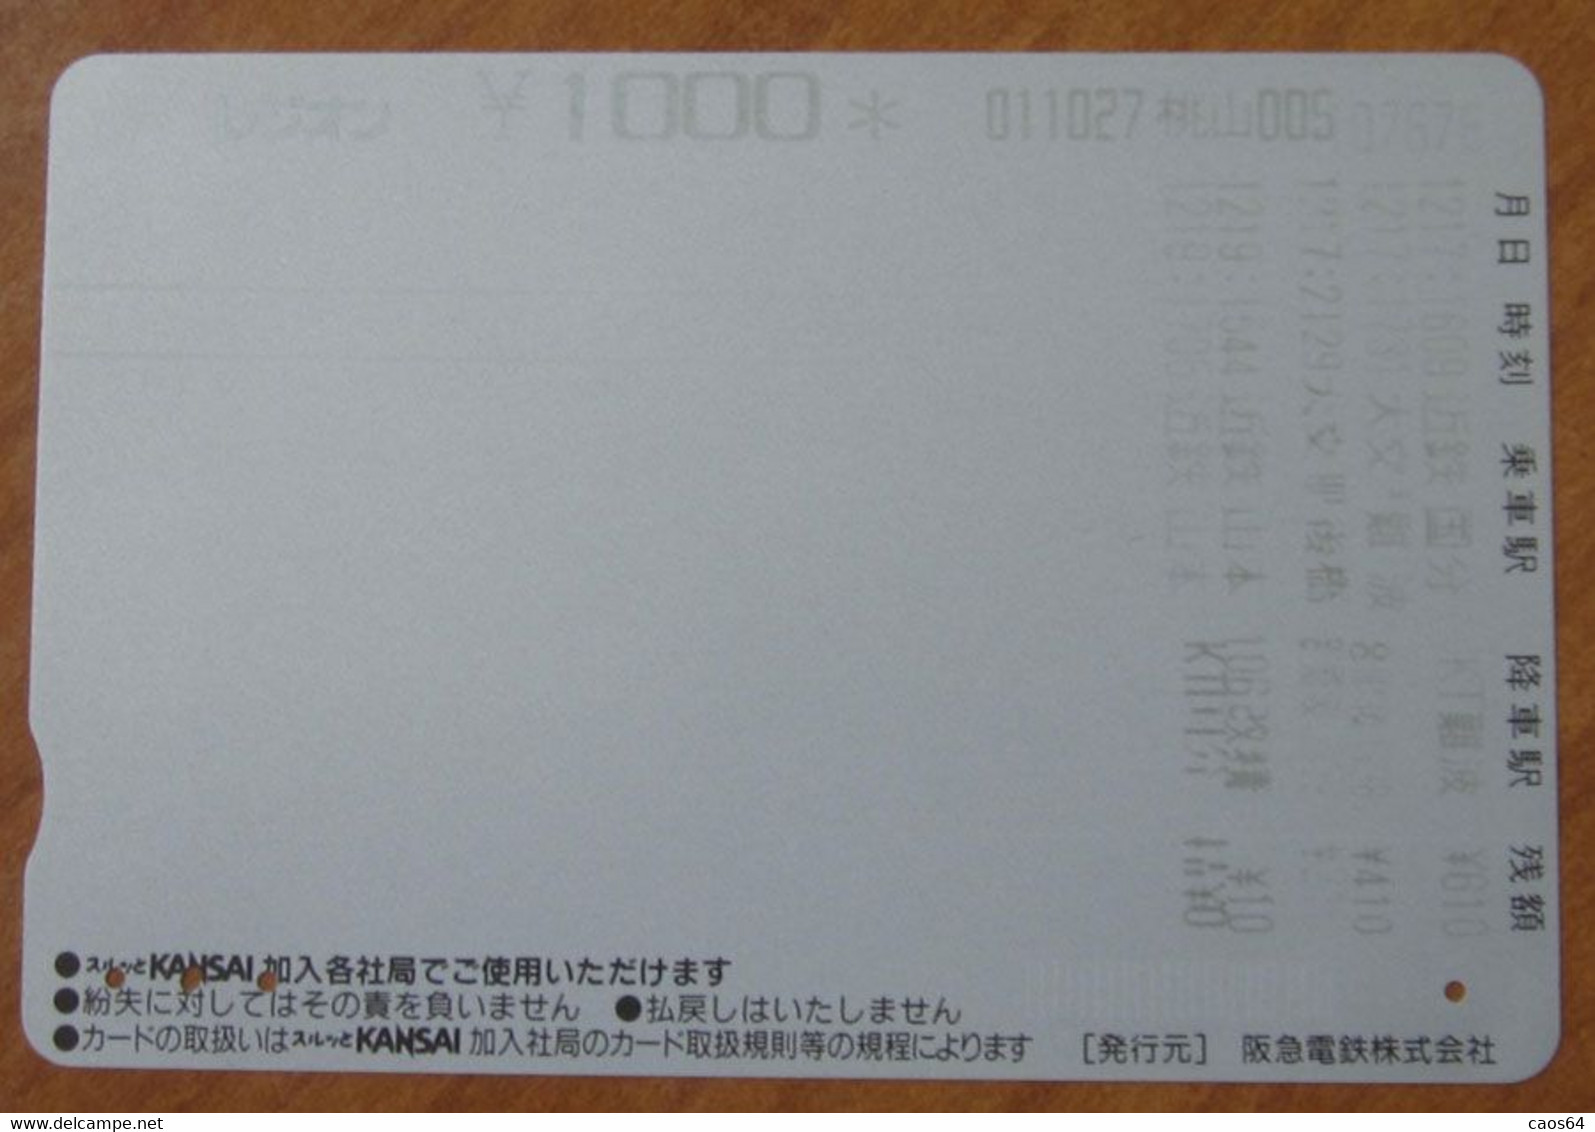 GIAPPONE Ticket Biglietto Treni Fumetti Smiling Star - Kansai Railway Card 1.000 ¥ - Usato - World